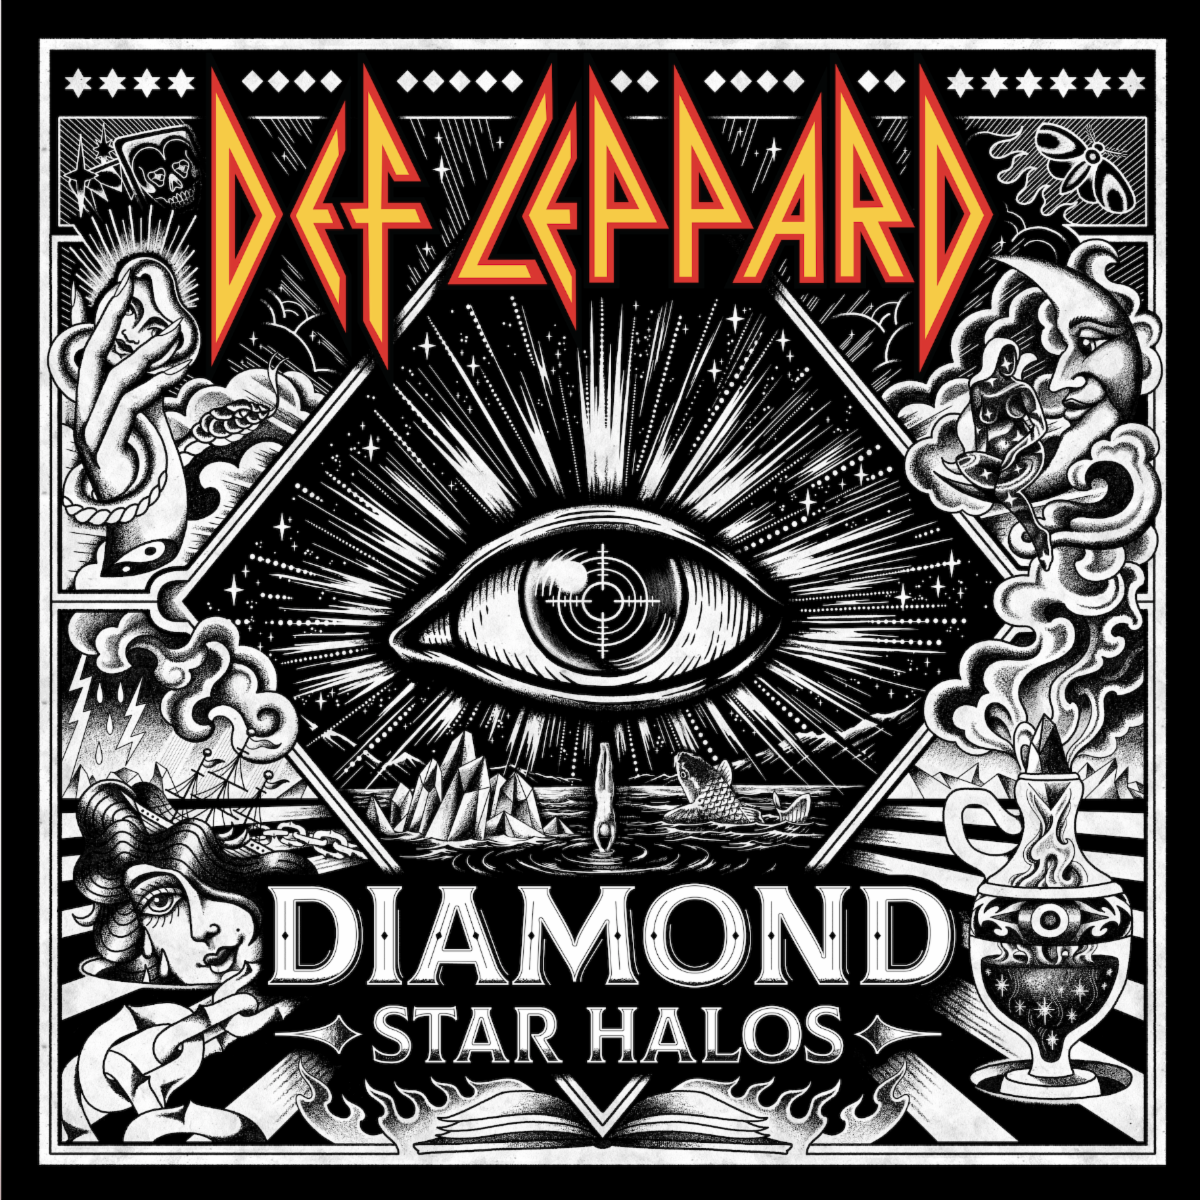 Def Leppard's New Album Diamond Star Halos Debuts at #1 on Billboard’s Hard Rock Chart